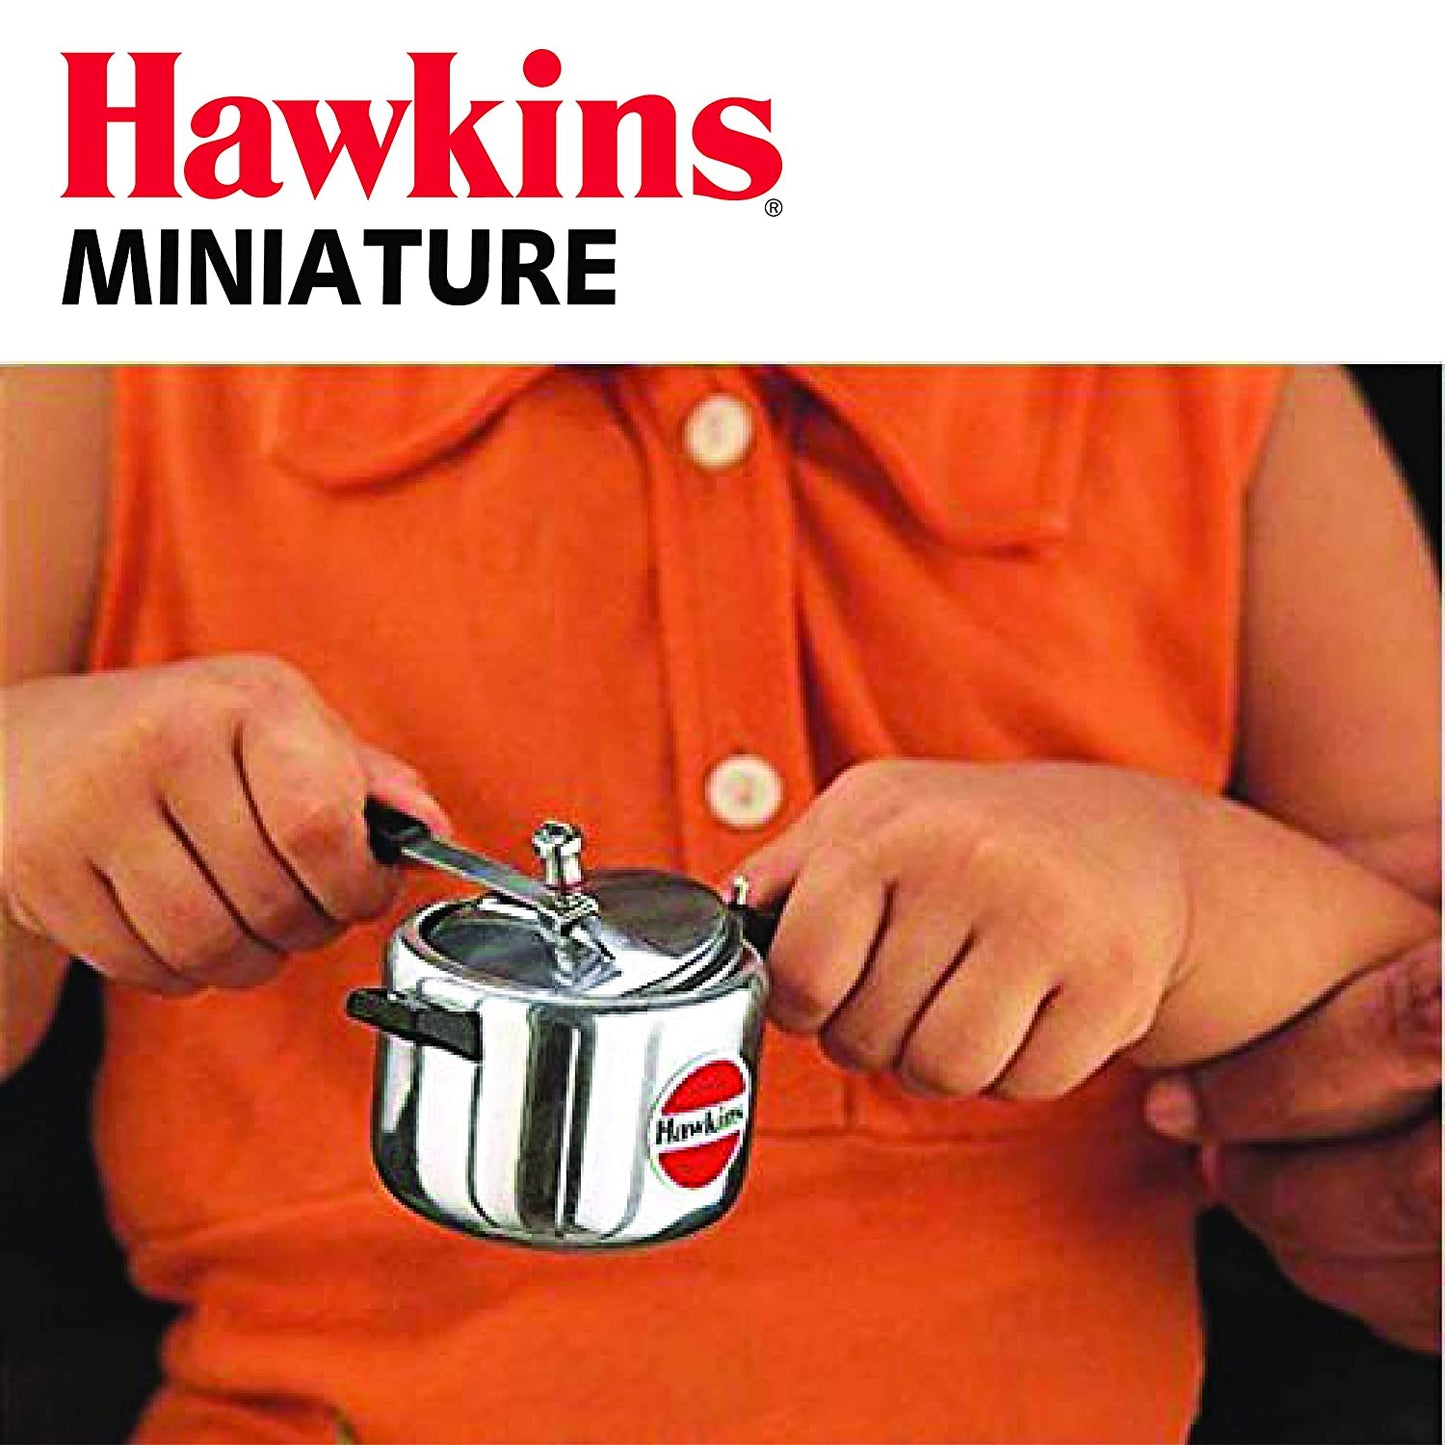 Hawkins Miniature Cooker